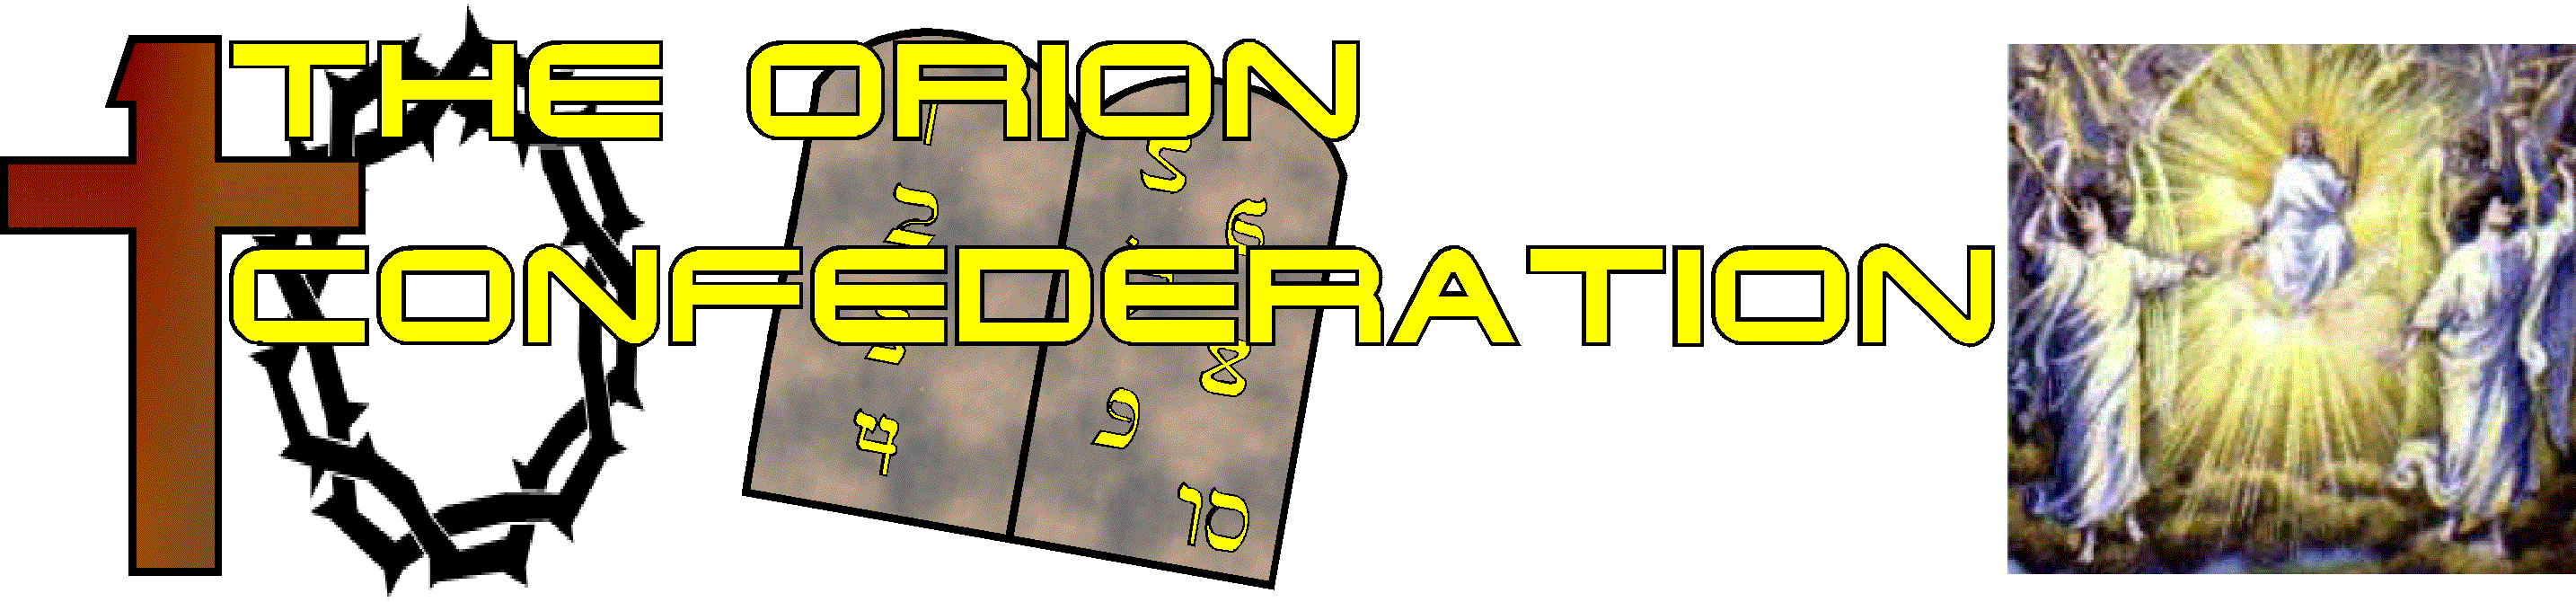 Image:Orion Confederation design